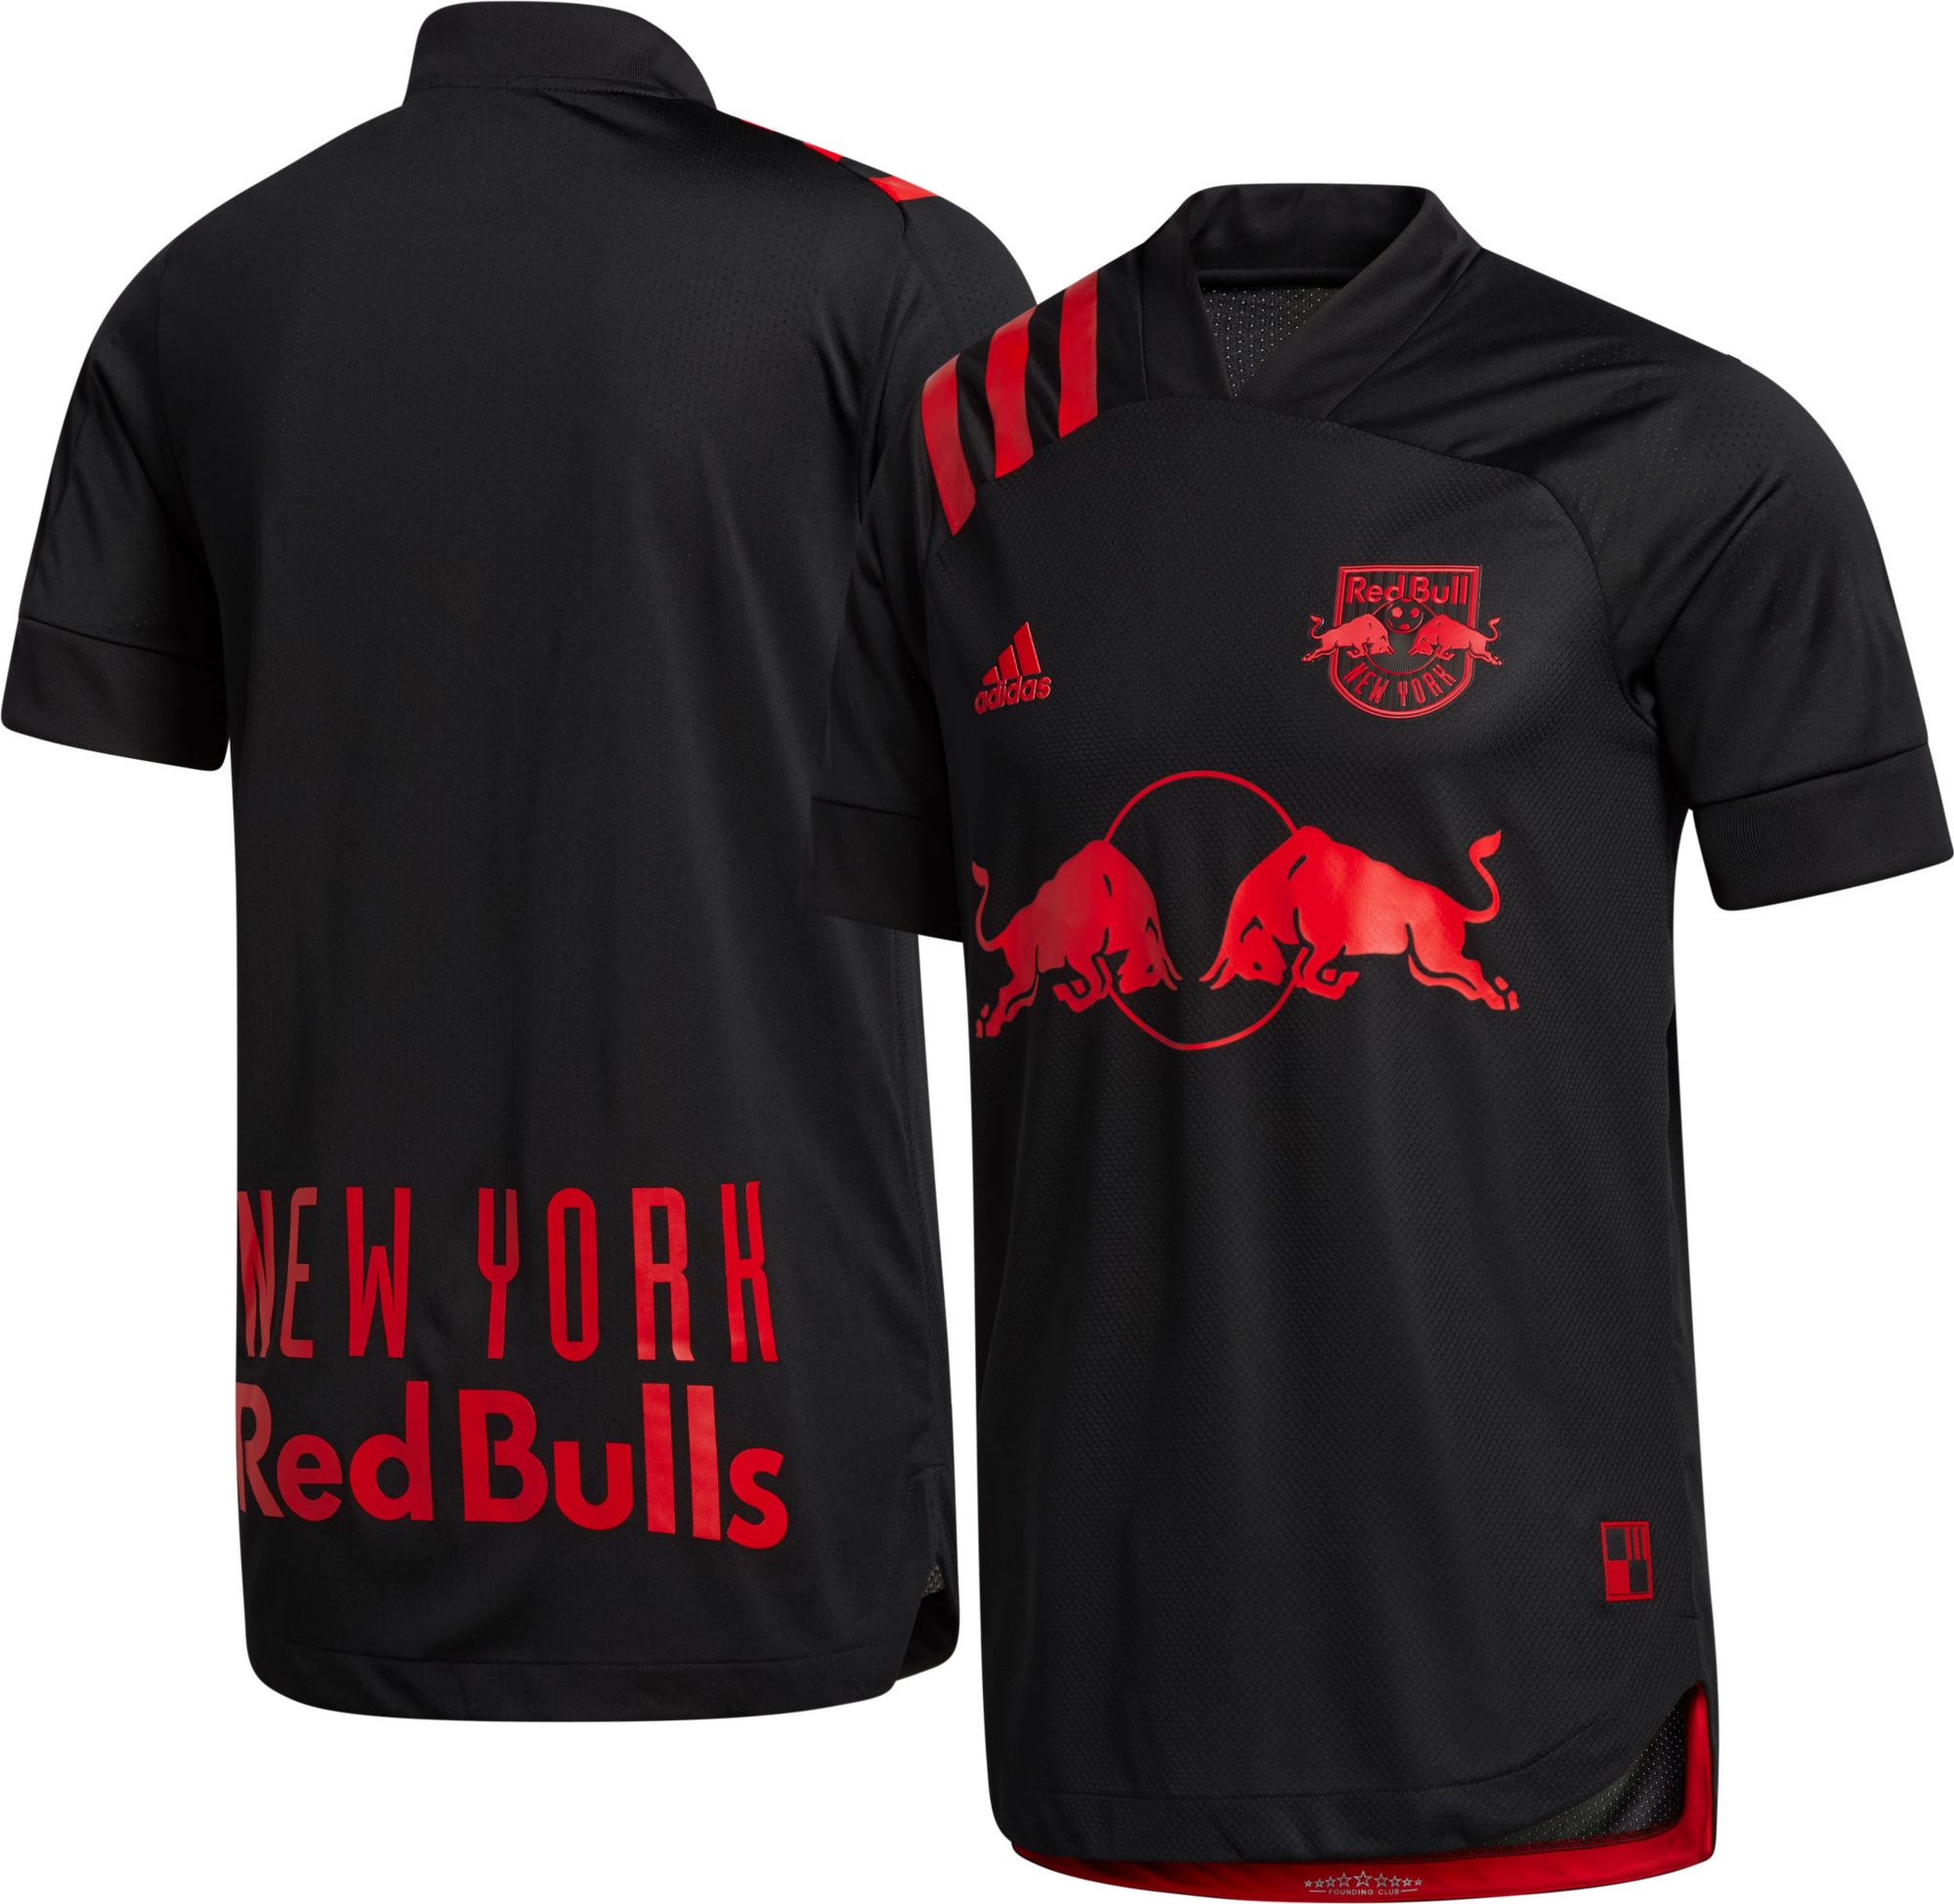 buy new york red bulls jersey